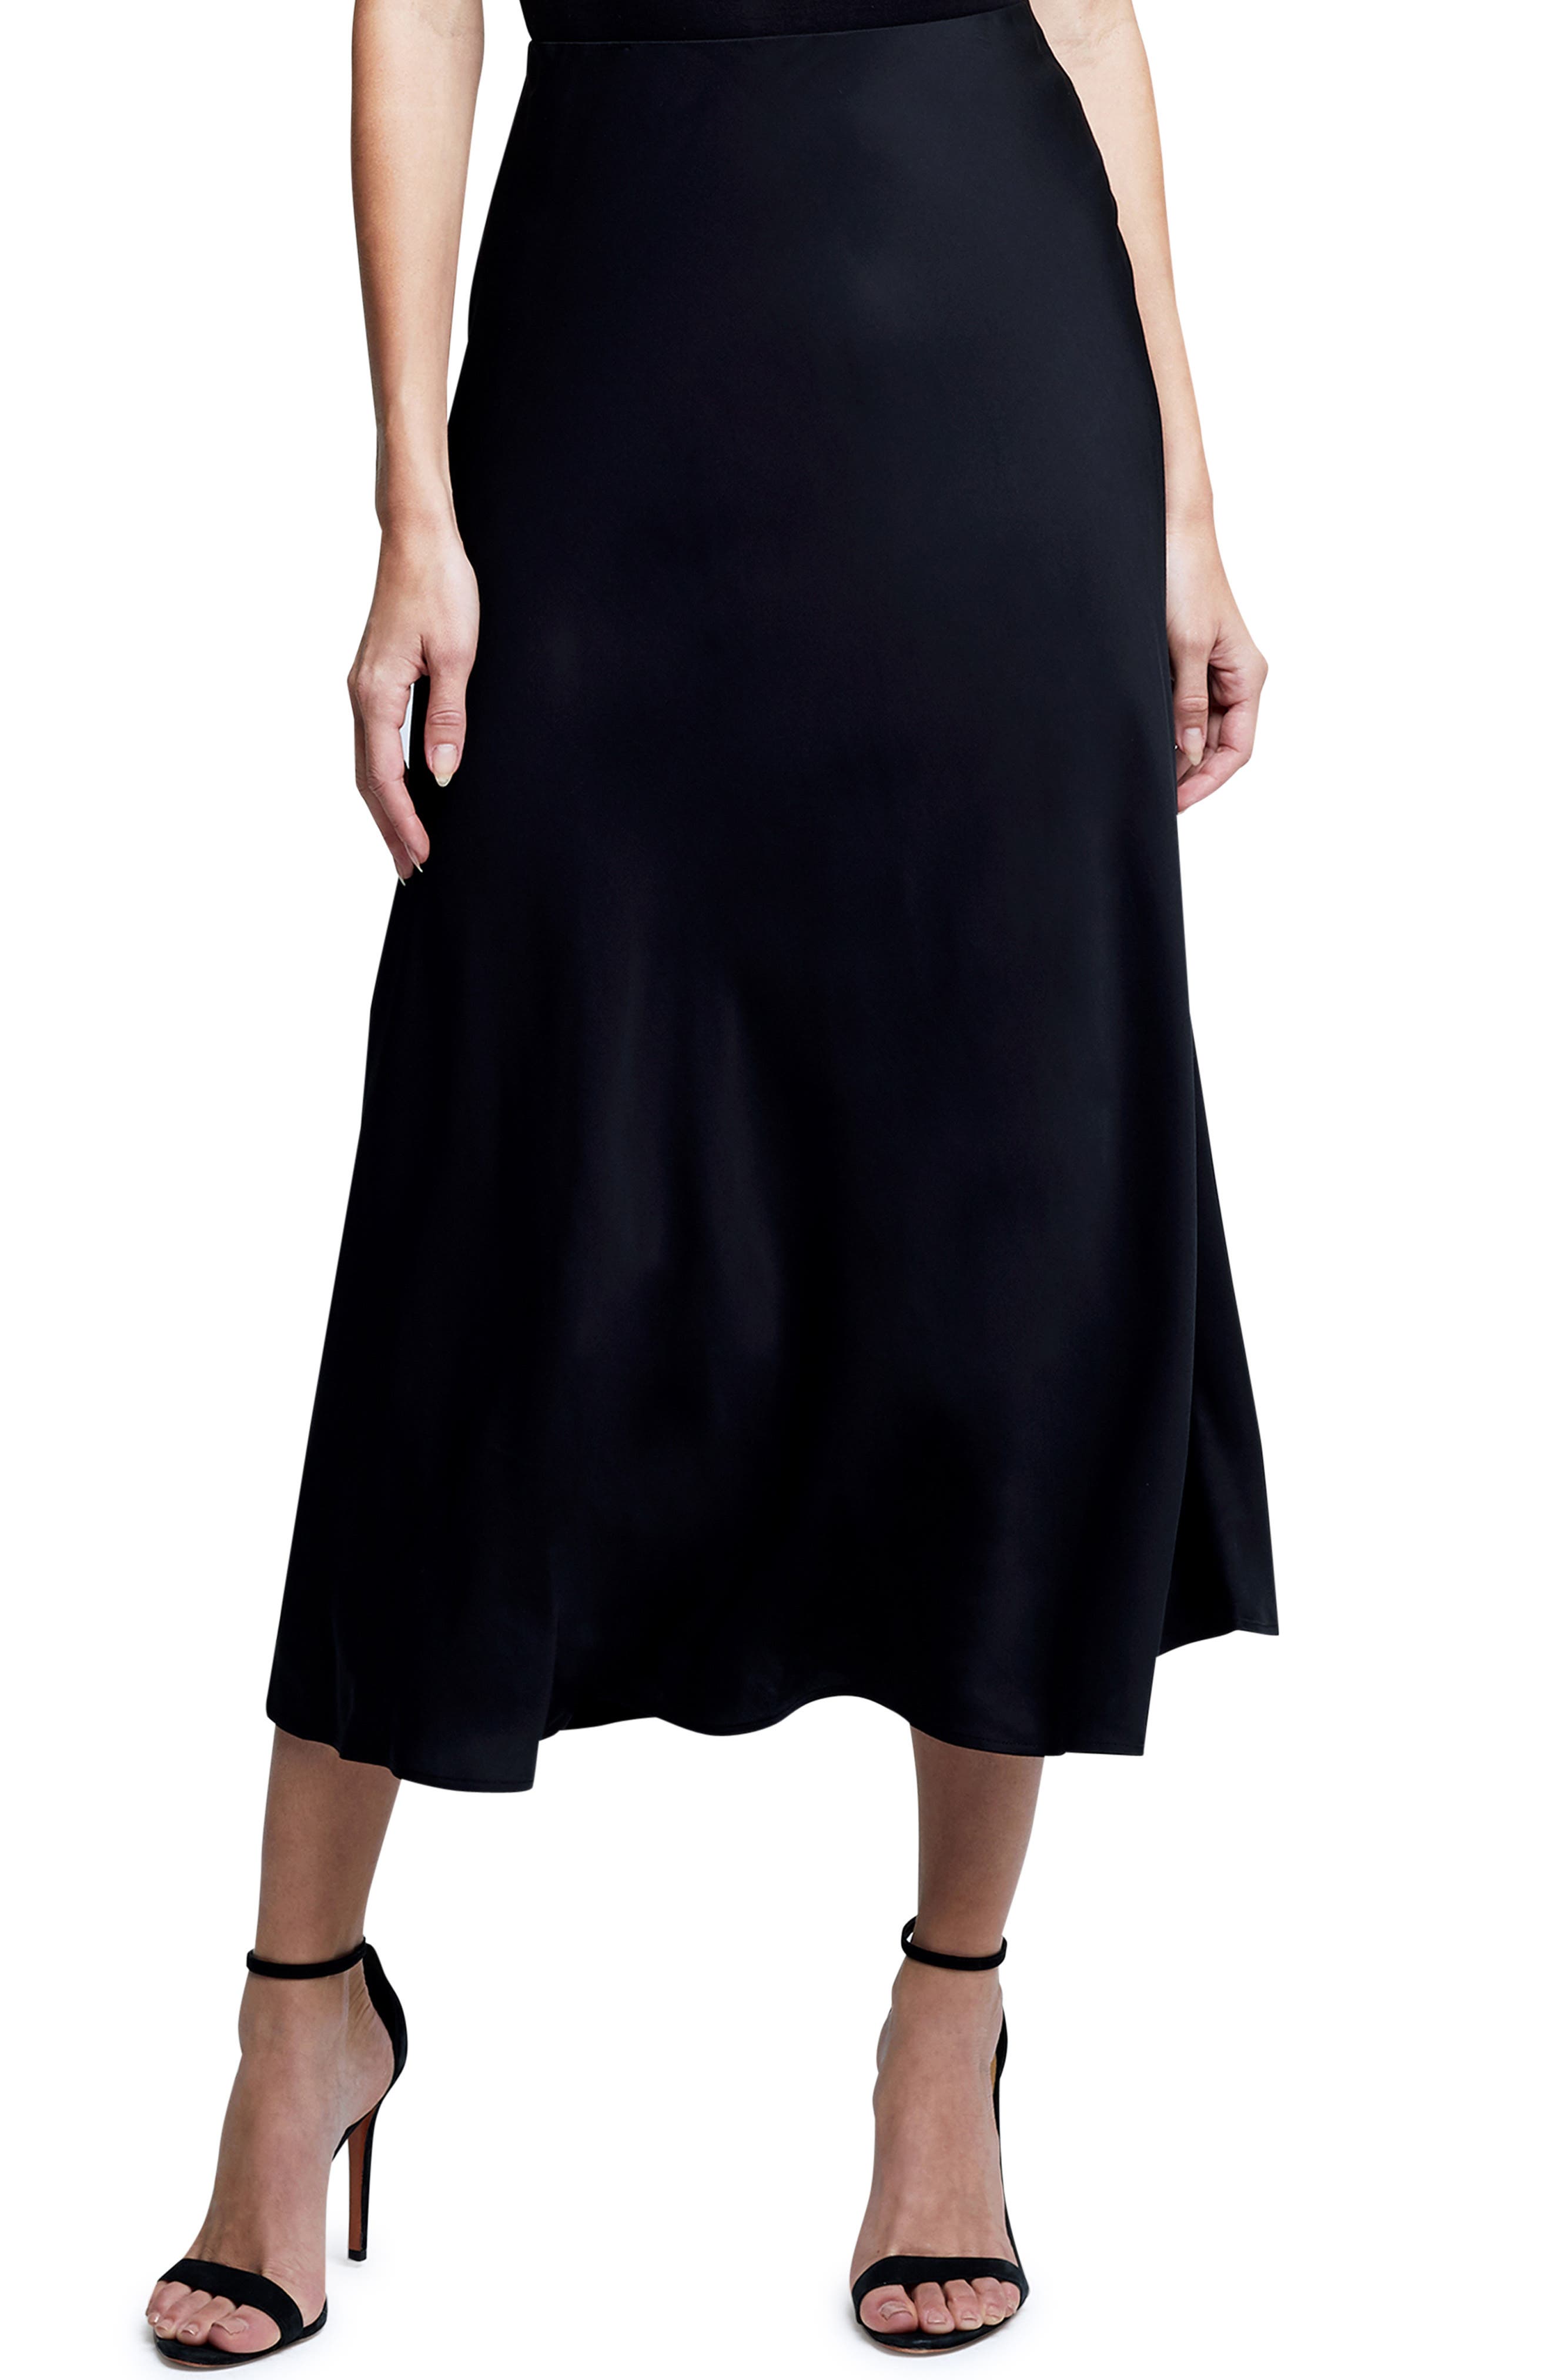 L'AGENCE Clarisa Bias Cut Satin Skirt in Black